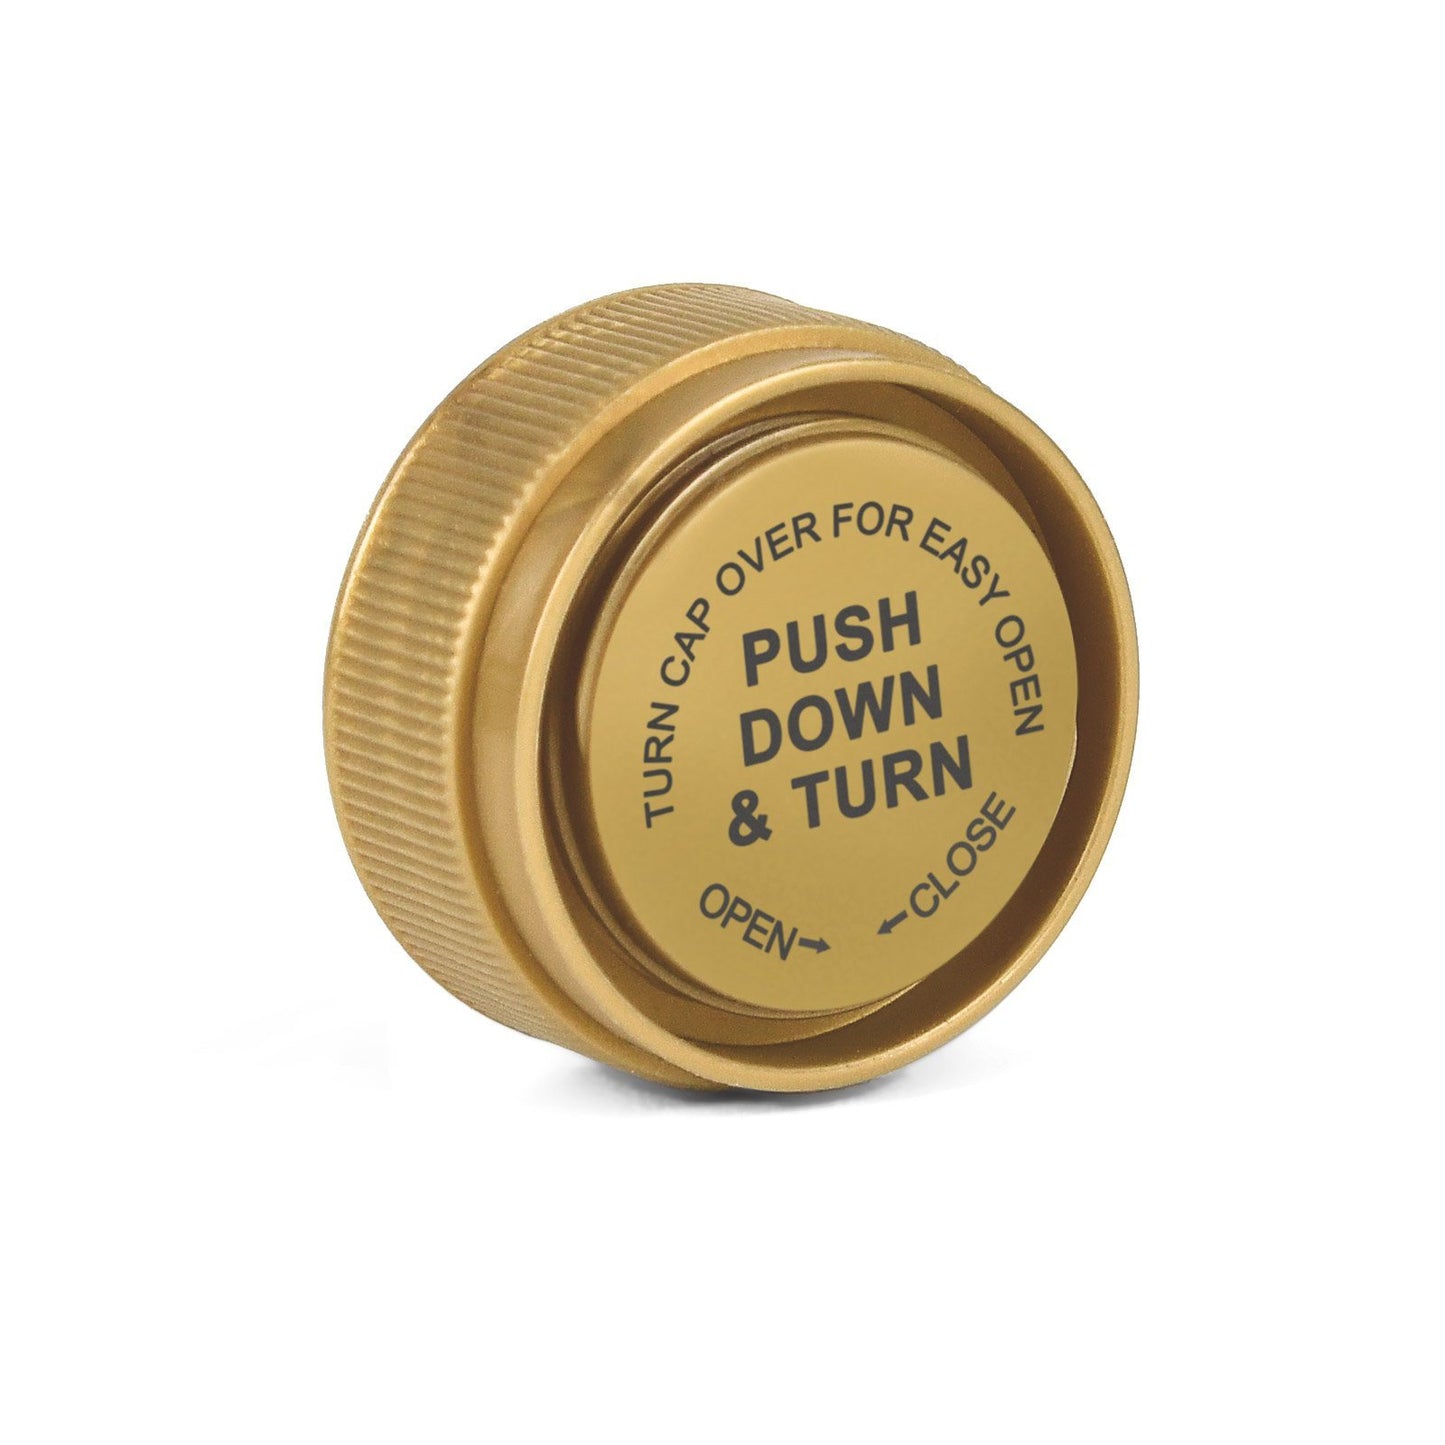 Opaque Gold 13 Dram Reversible Cap Vials for Medical Pharmacies & Dispensaries